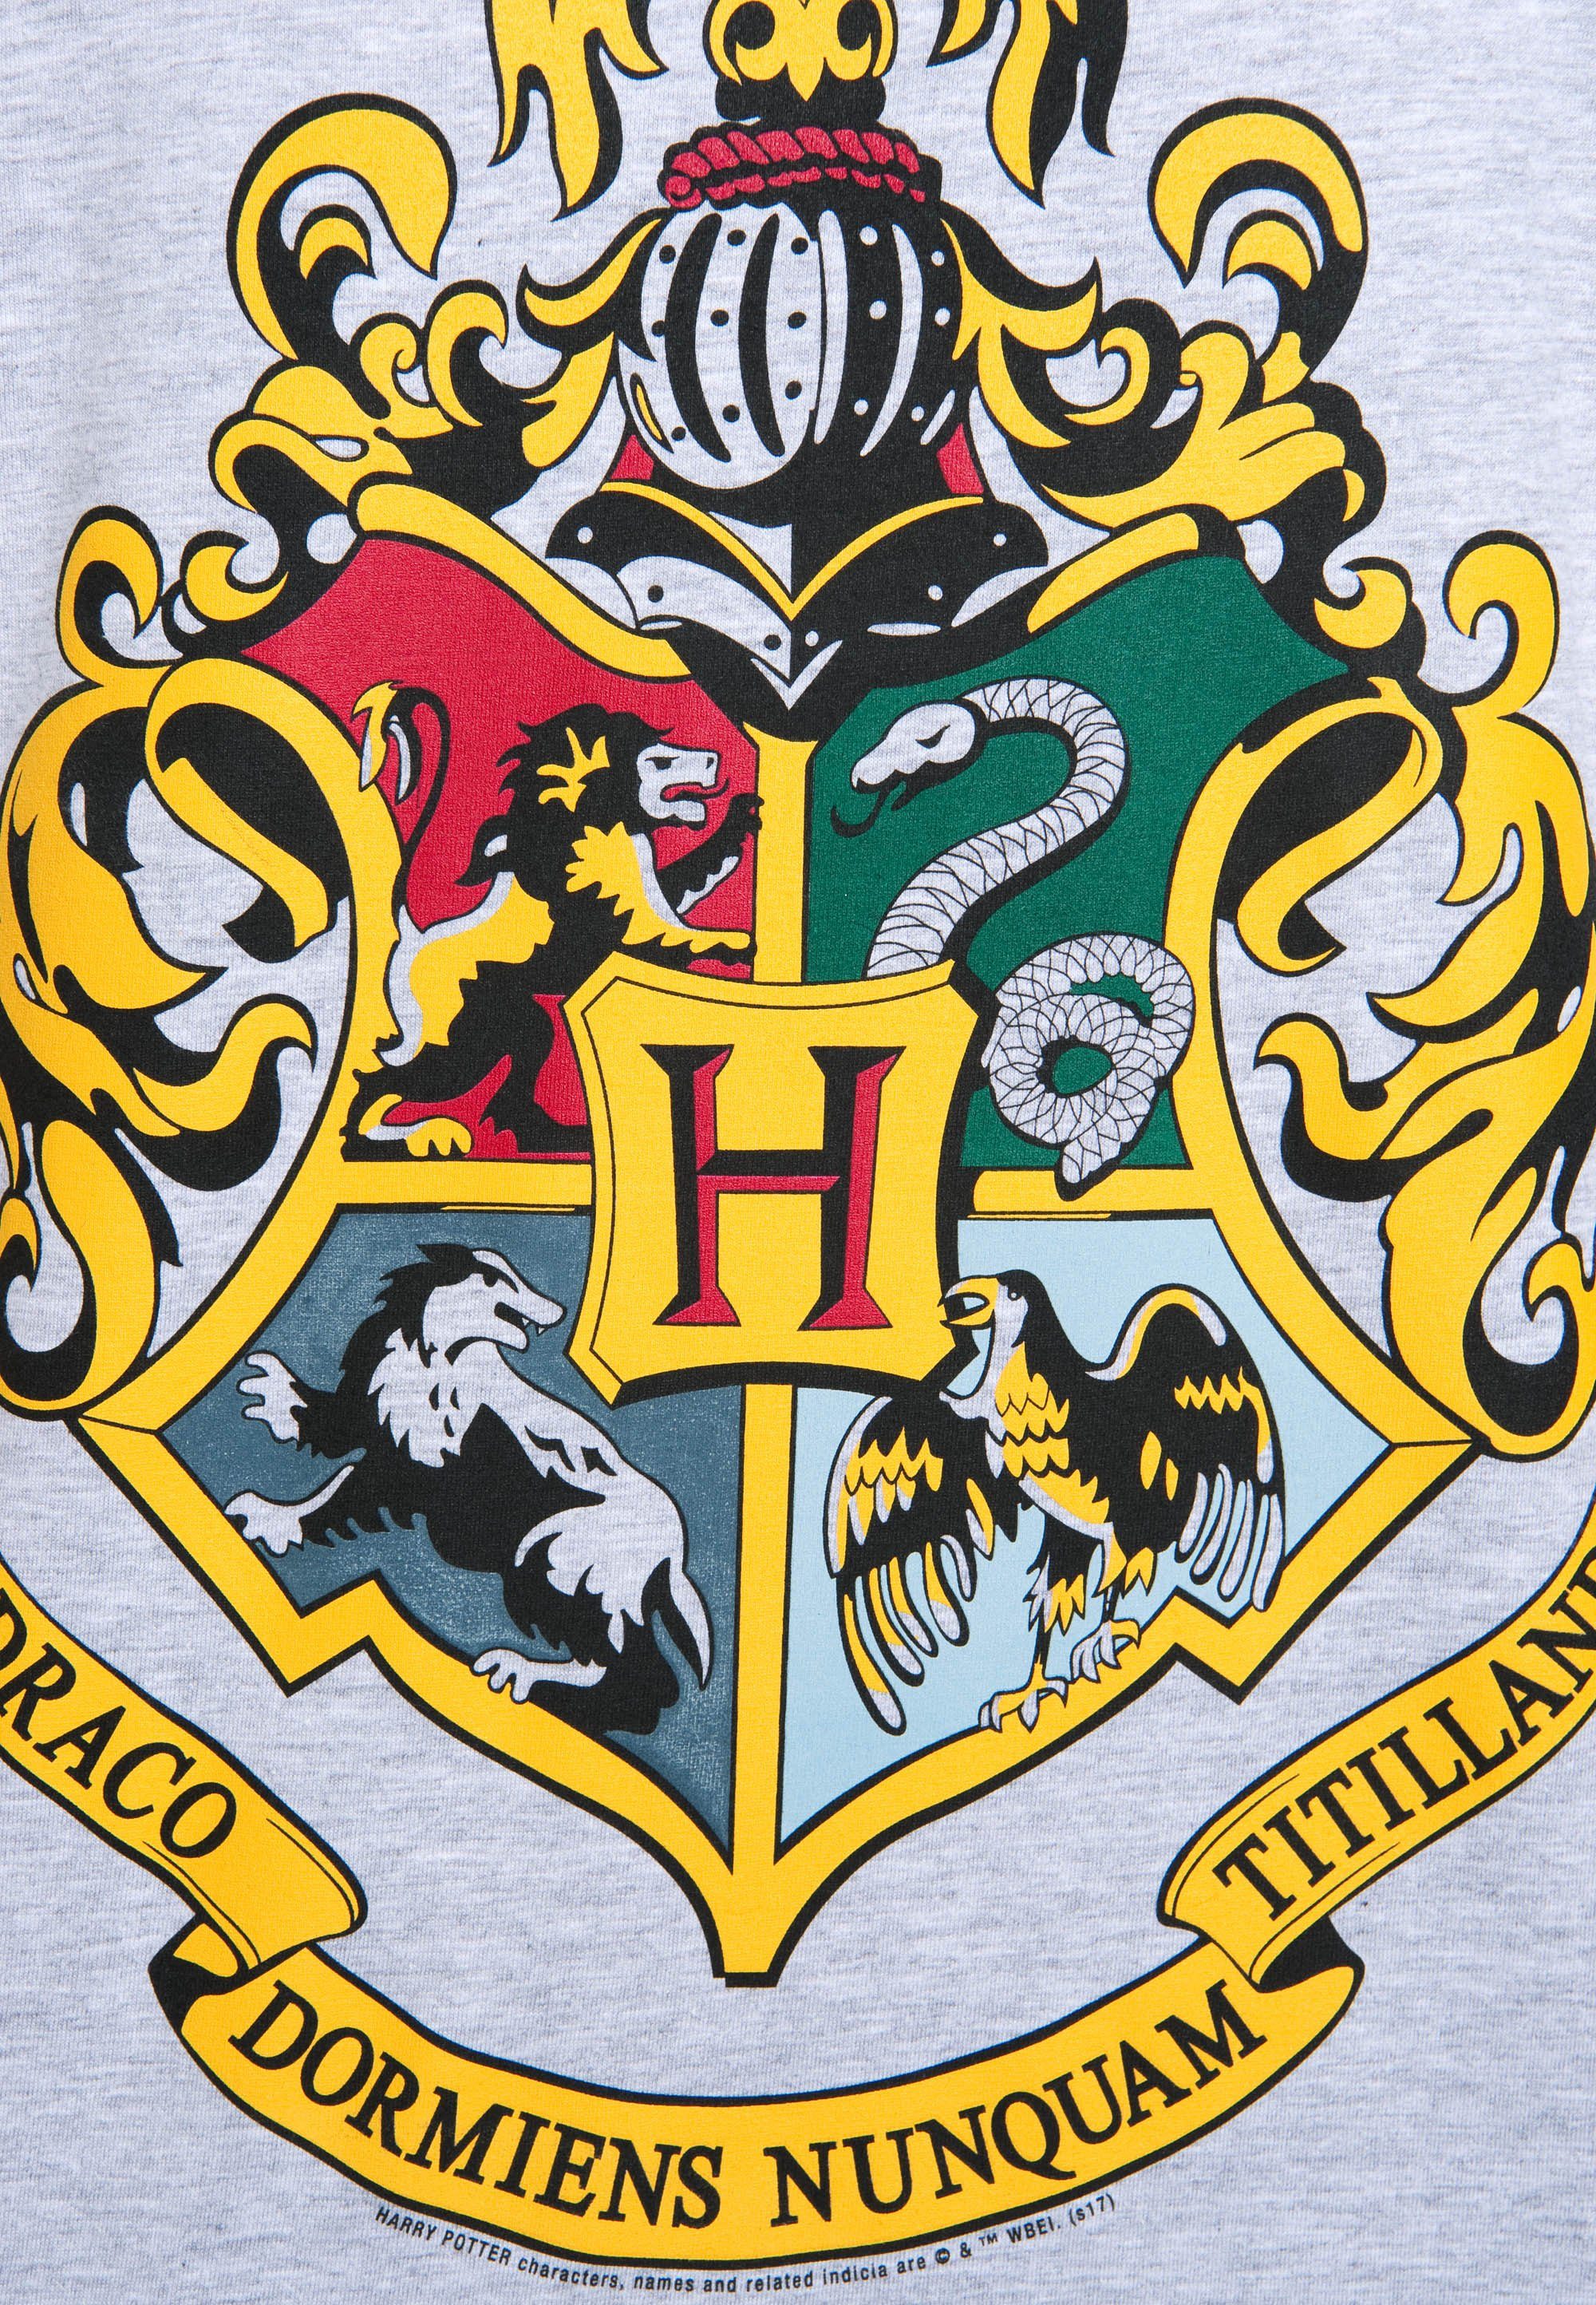 LOGOSHIRT Siebdruck Hogwarts-Logo mit T-Shirt hochwertigem